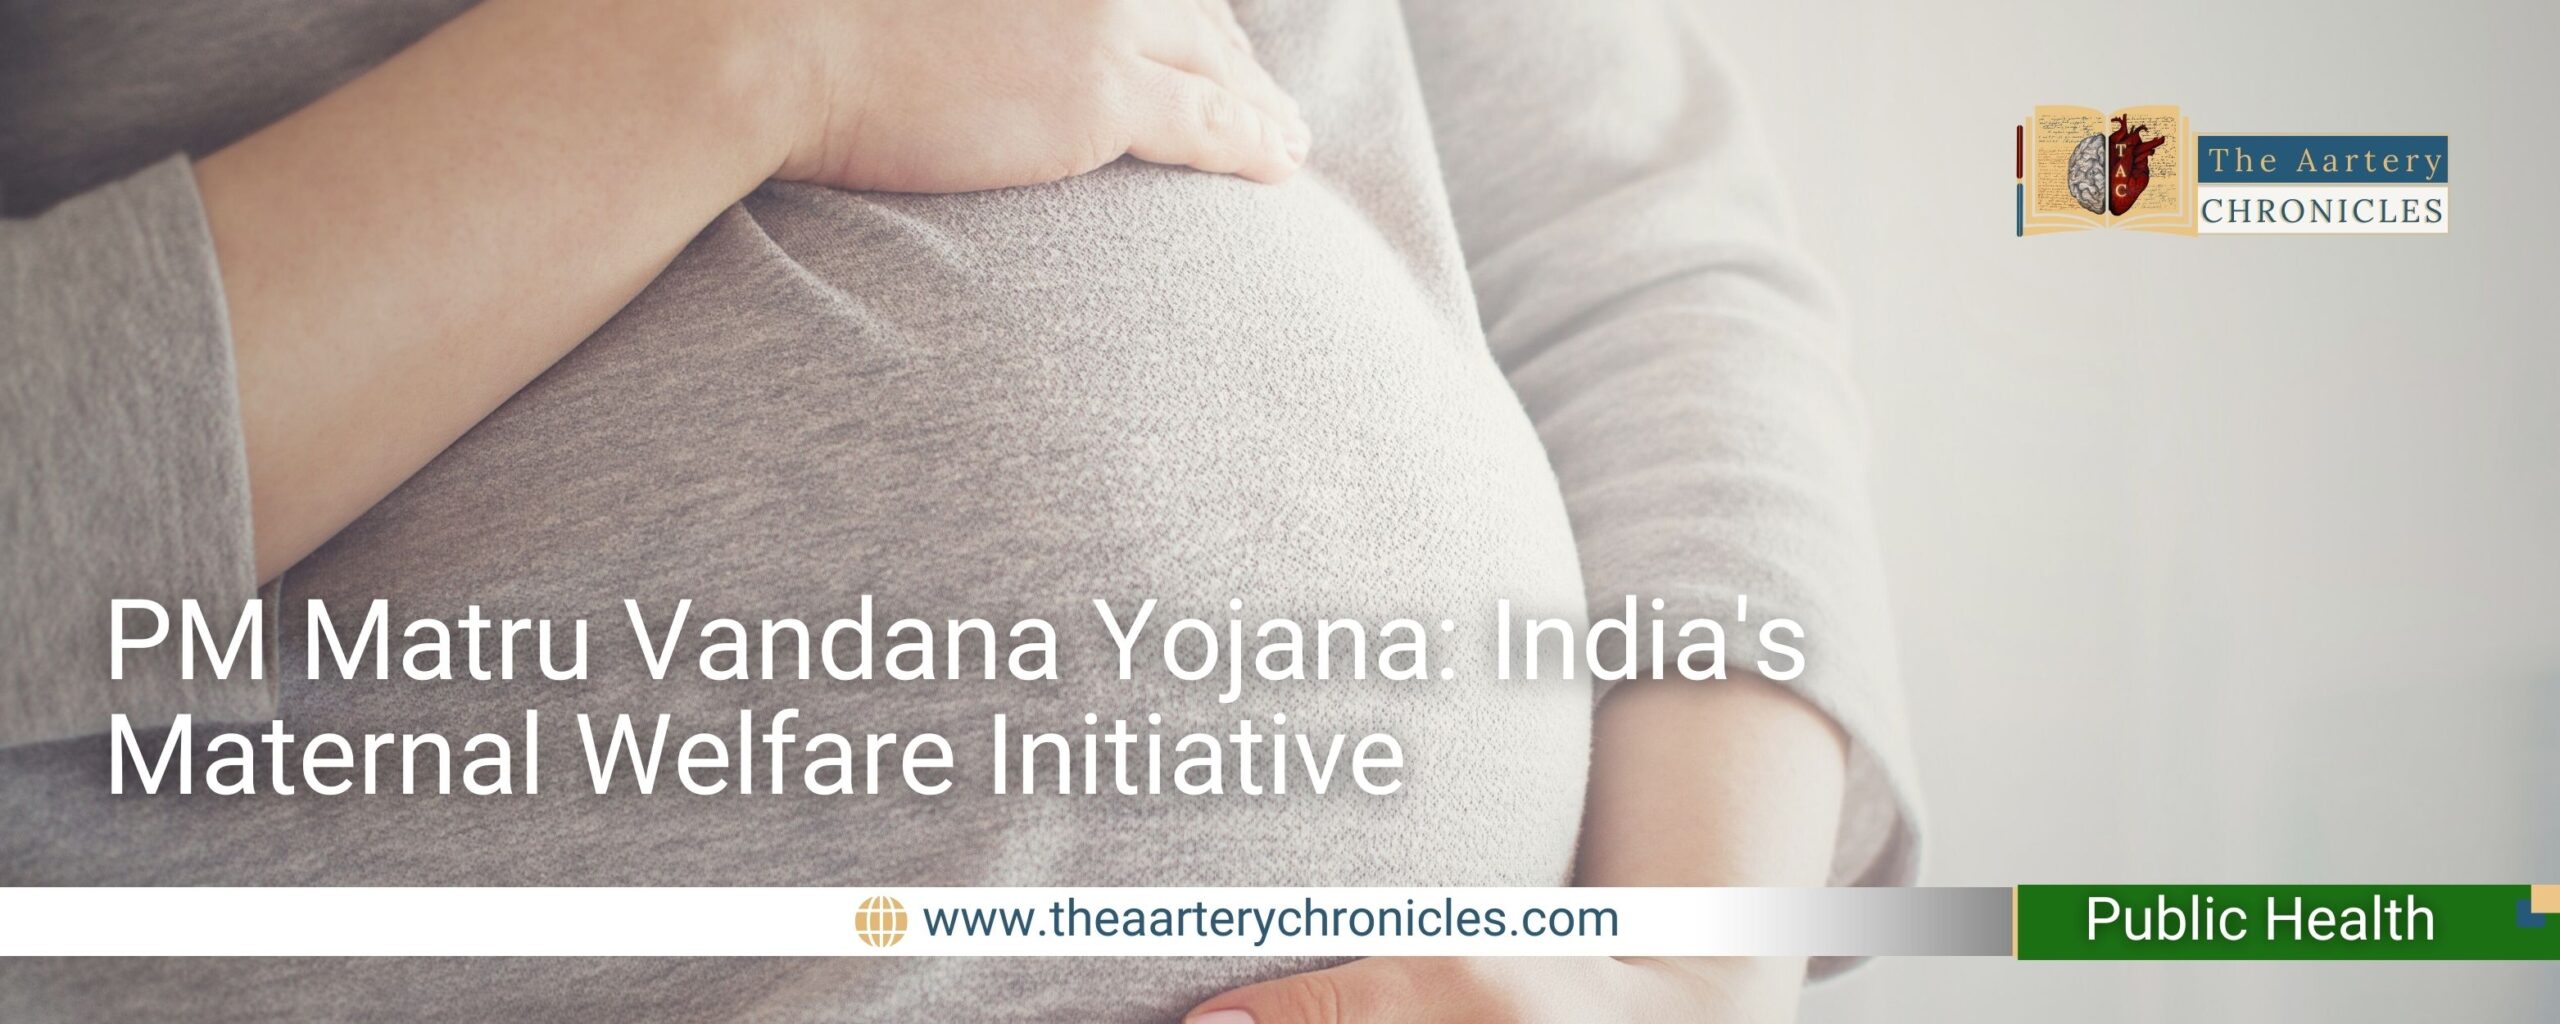 PM-Matru-Vandana-Yojana-India's-Maternal-Welfare-Initiative-the-aartery-chronicles-tac